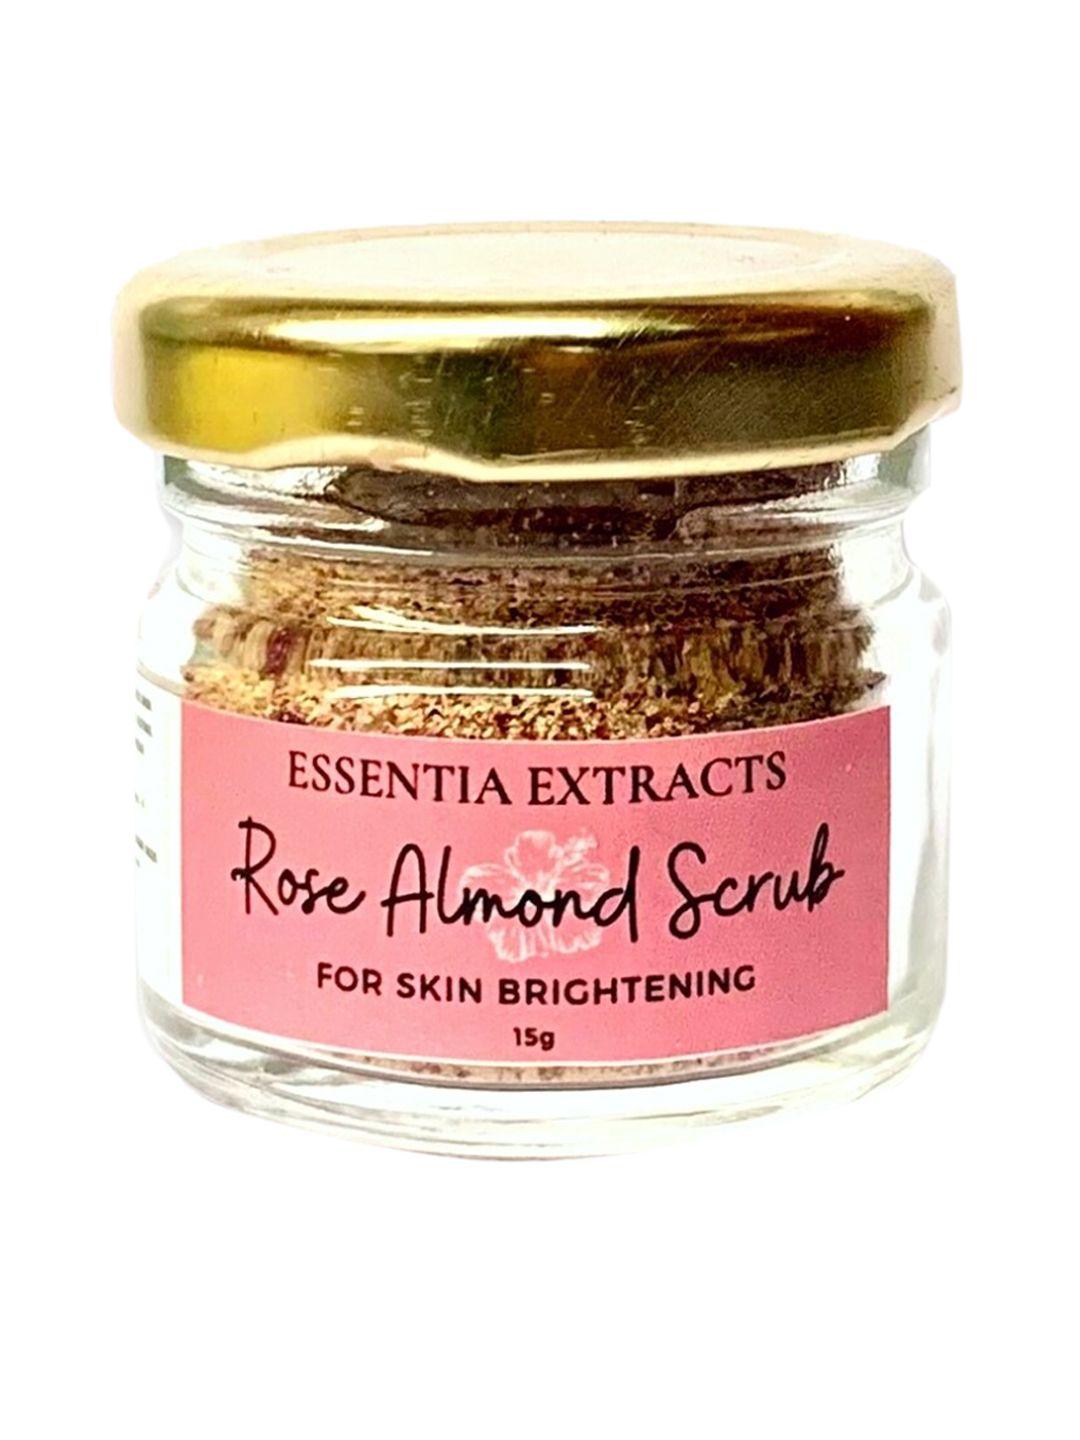 essentia extracts rose almond skin brightening face & body exfoliating scrub - 15g